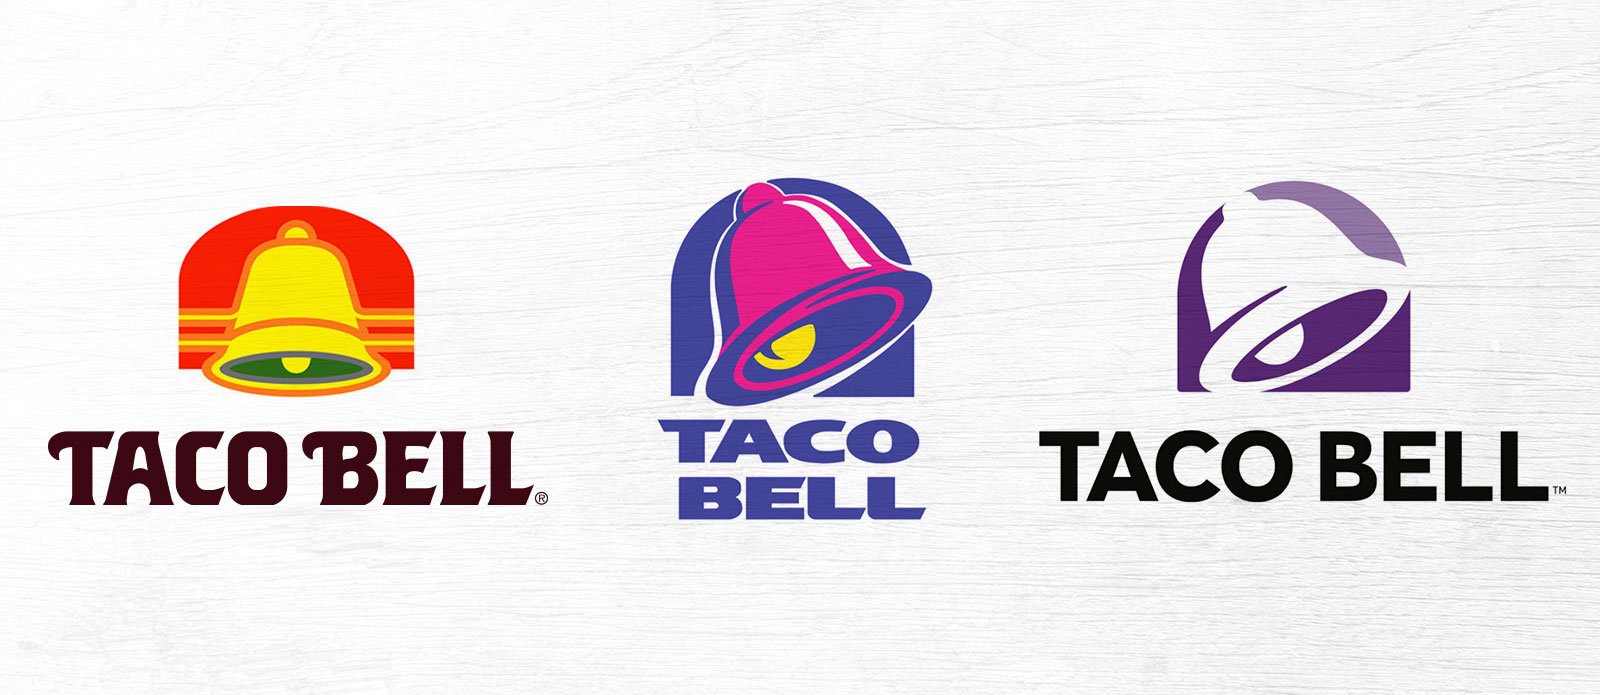 History of the Taco Bell Logo